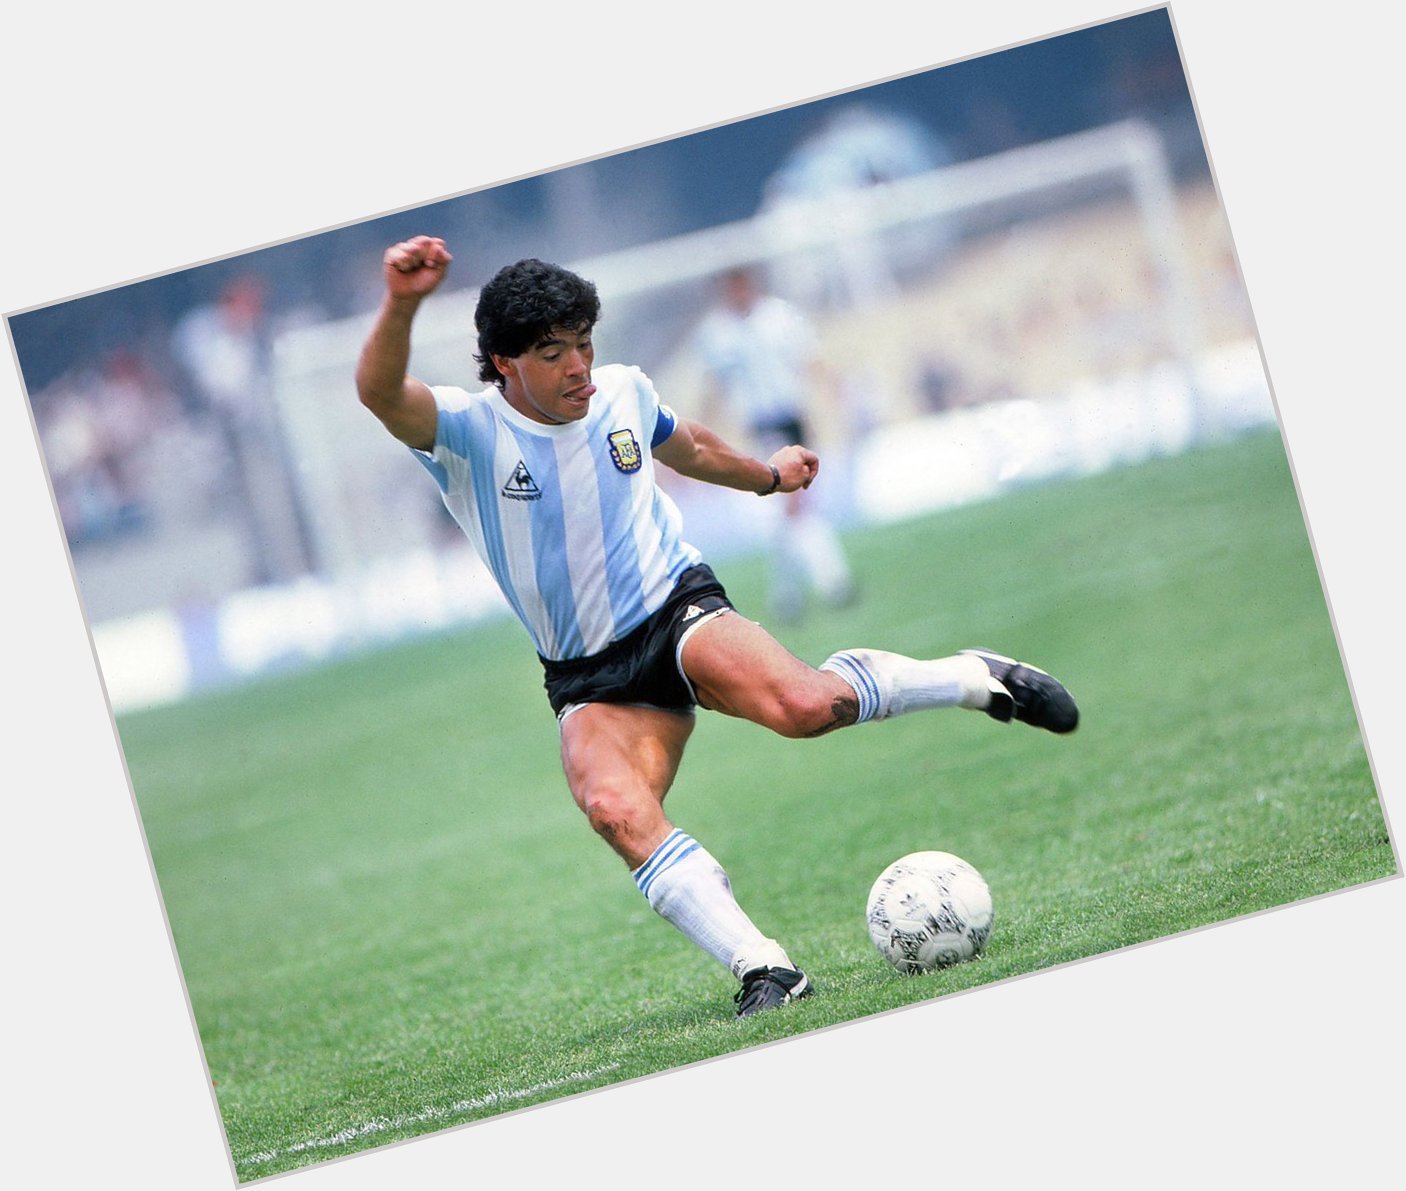 Happy birthday to the God, the best of all time, Diego Armando Maradona. 